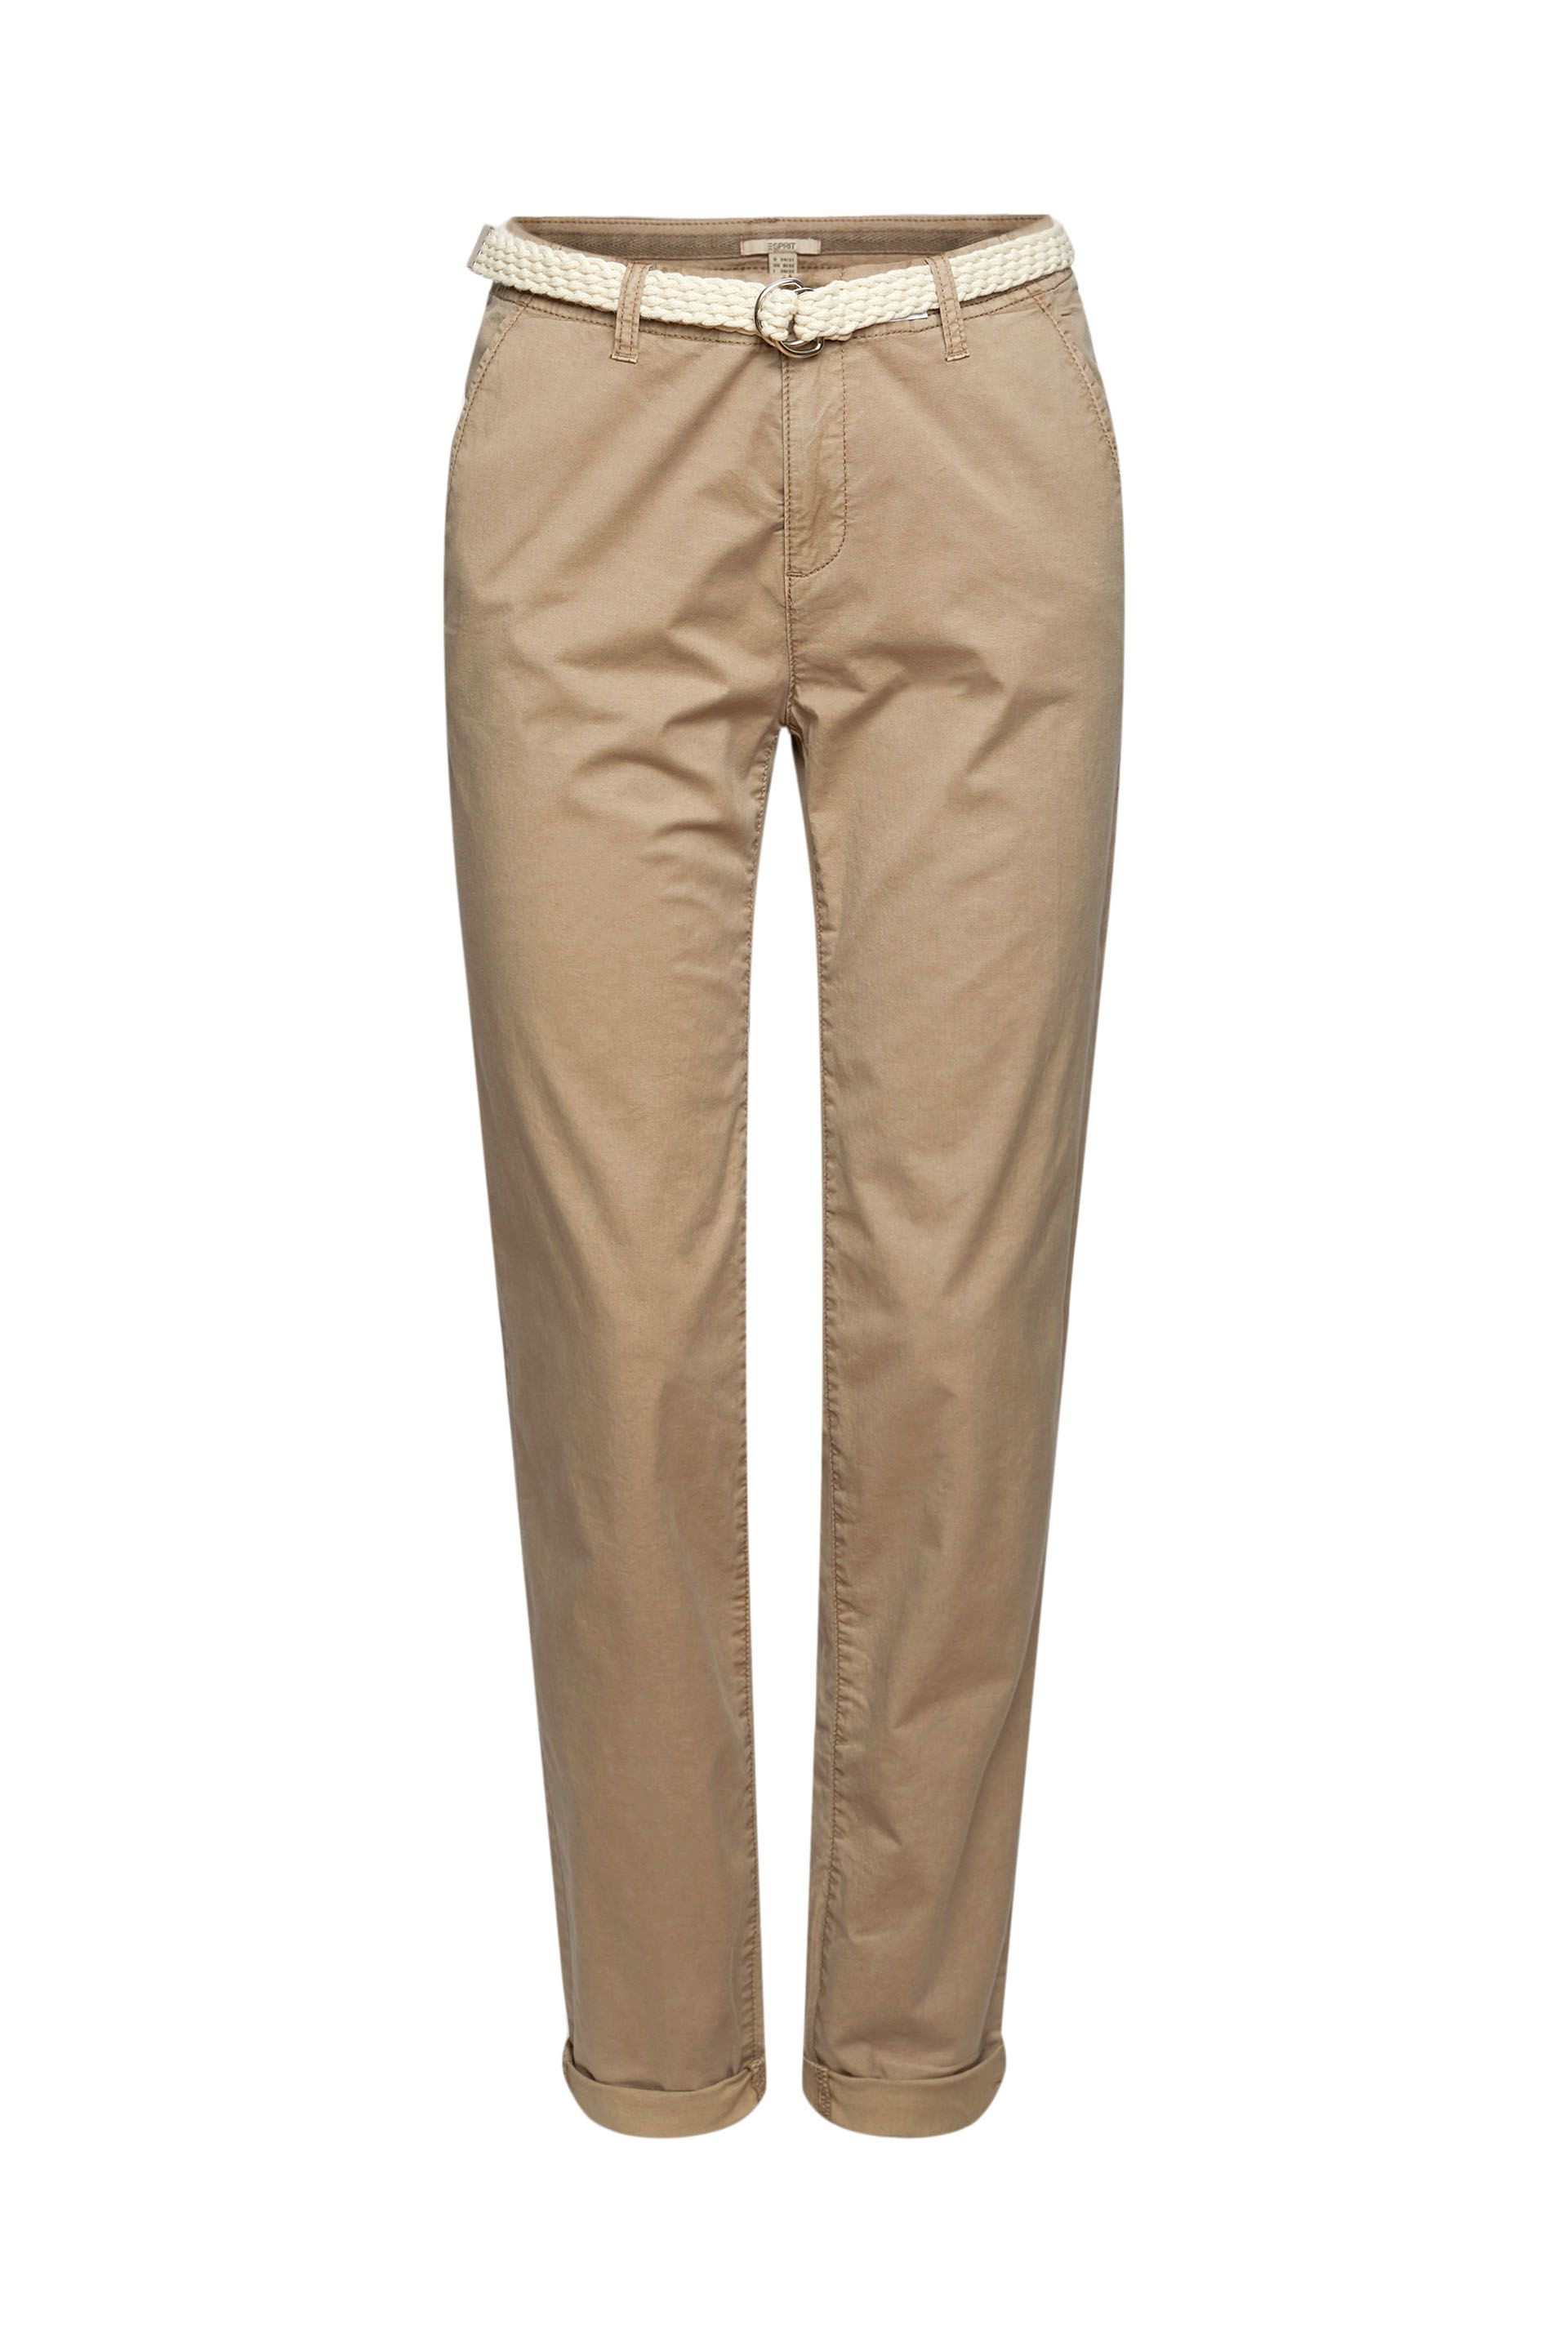 Pantaloni chino con cintura intrecciata, Beige torrone, large image number 0